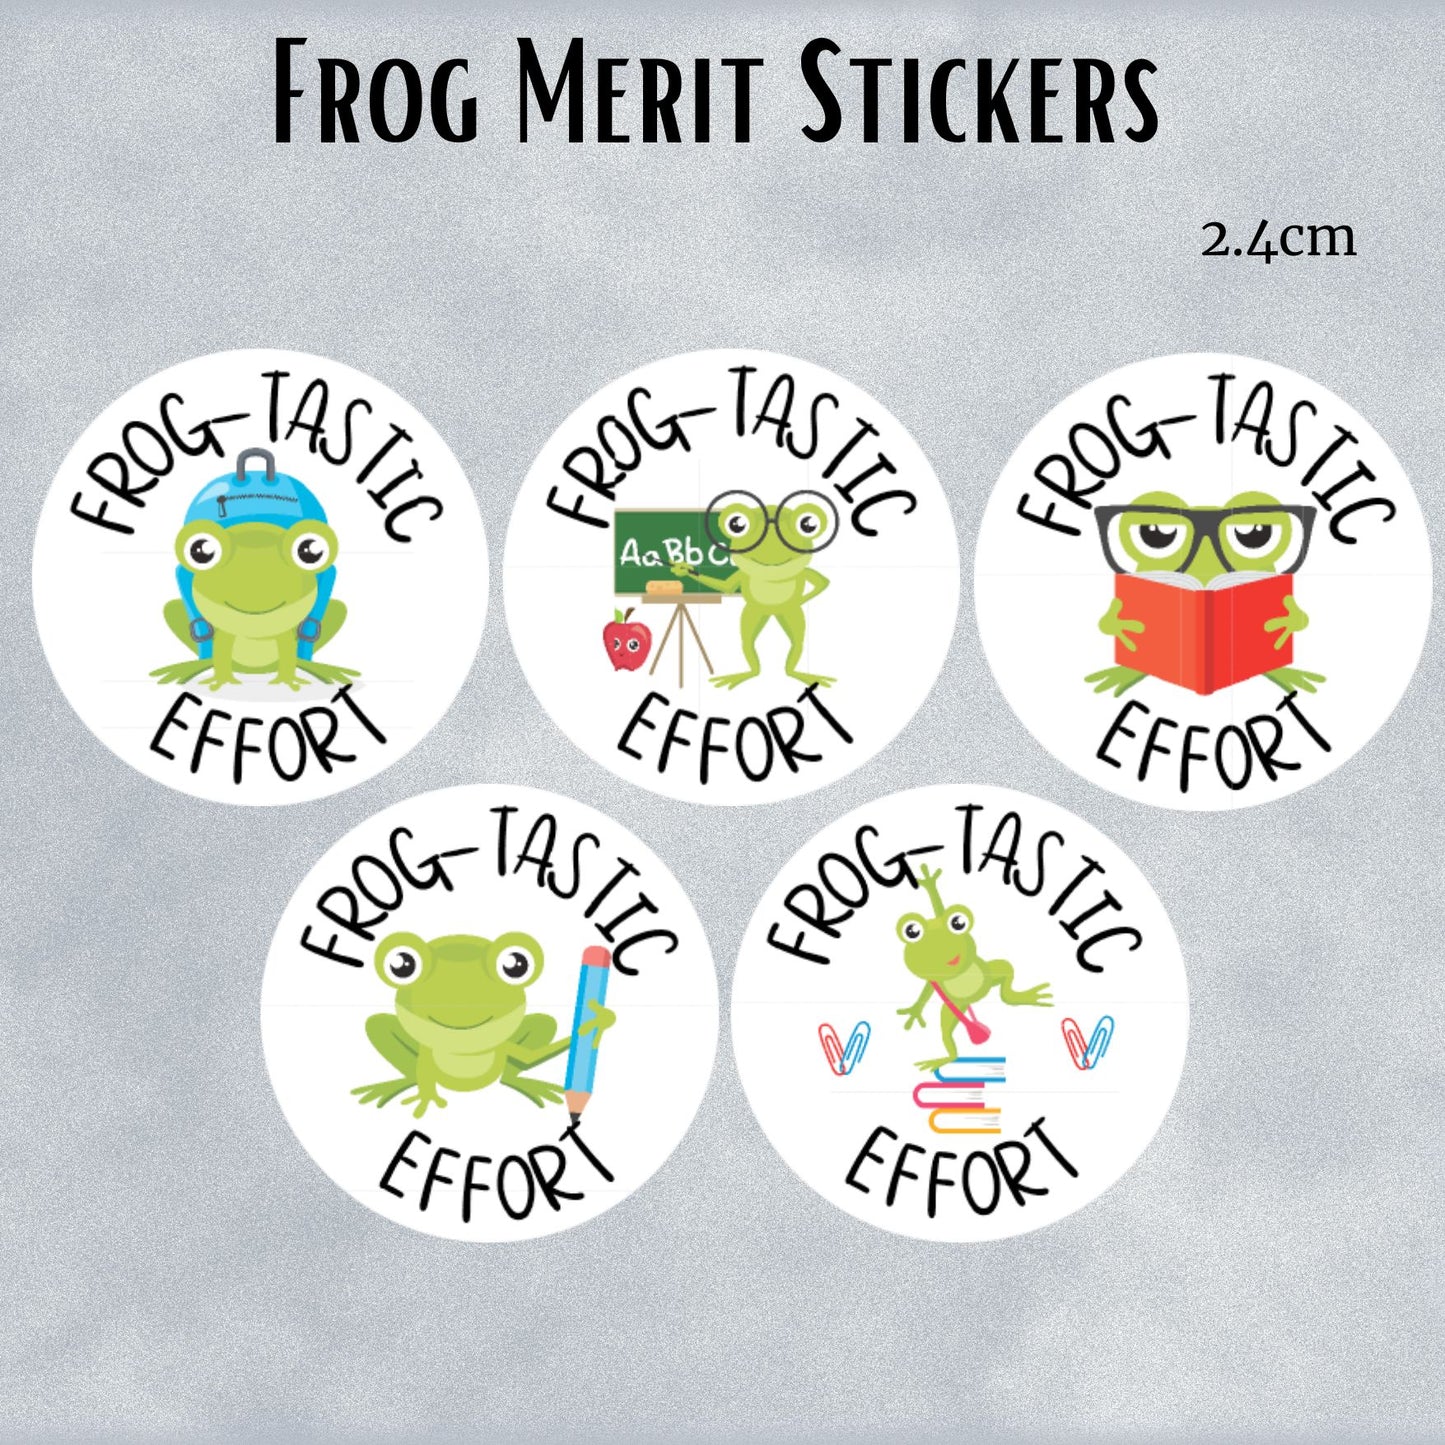 Frogs General Merit Stickers